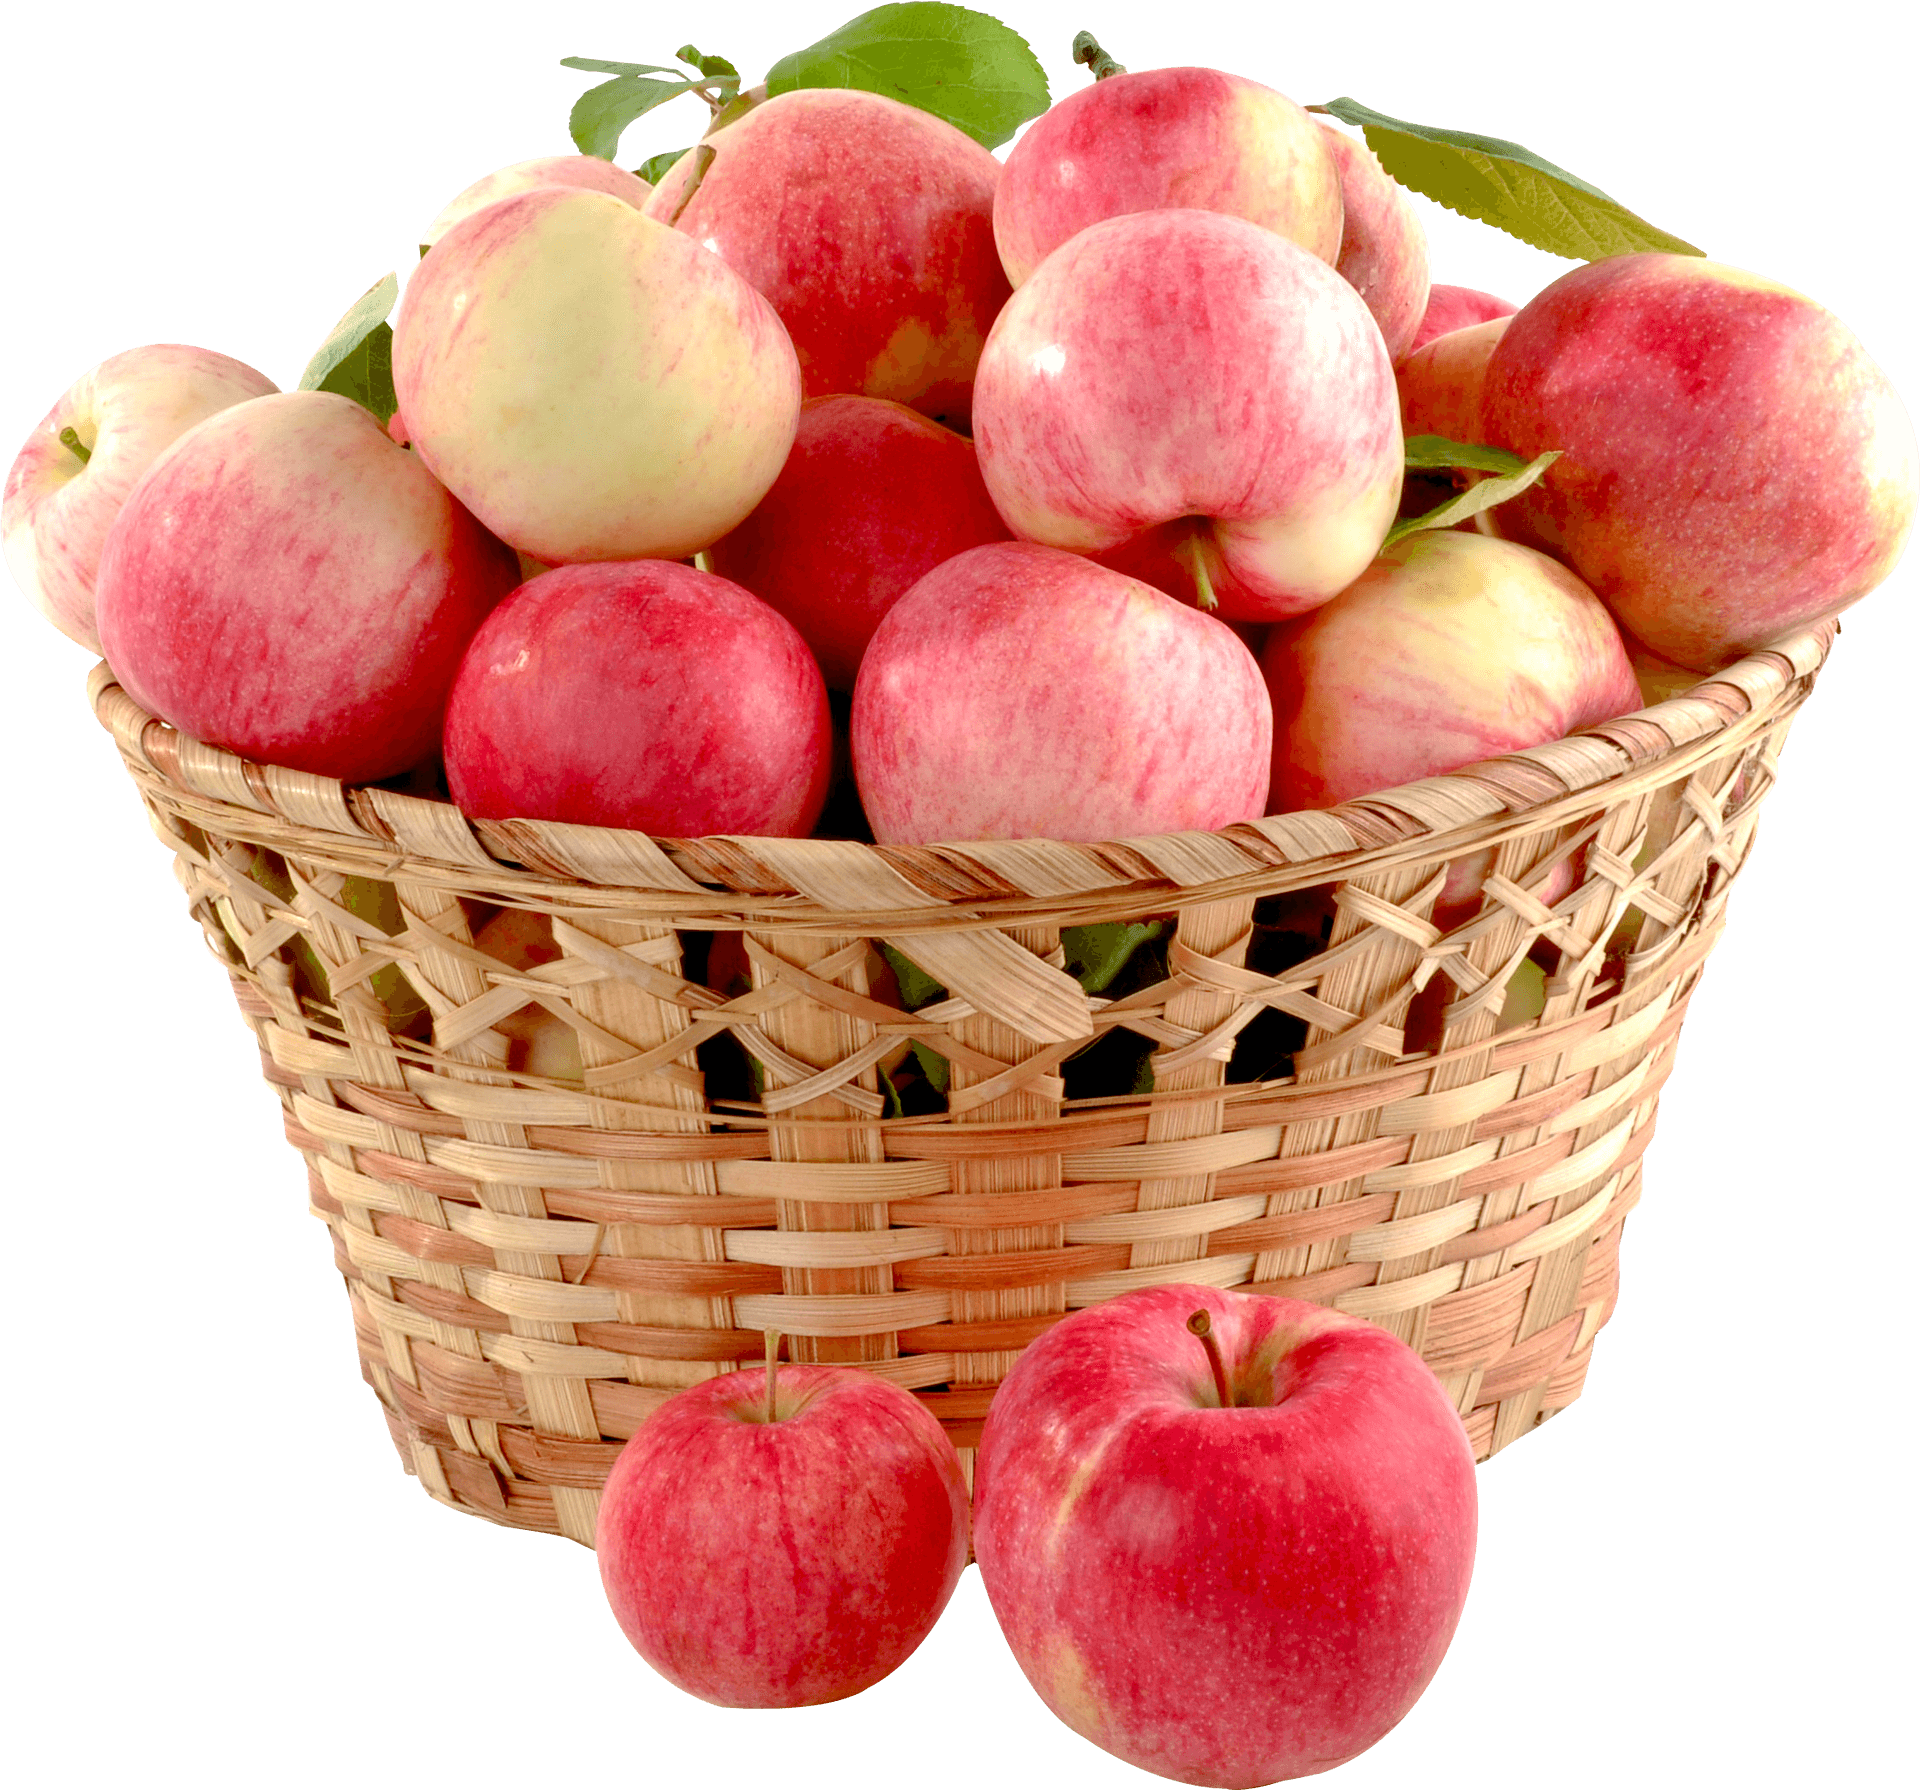 Fresh Applesin Wicker Basket PNG image